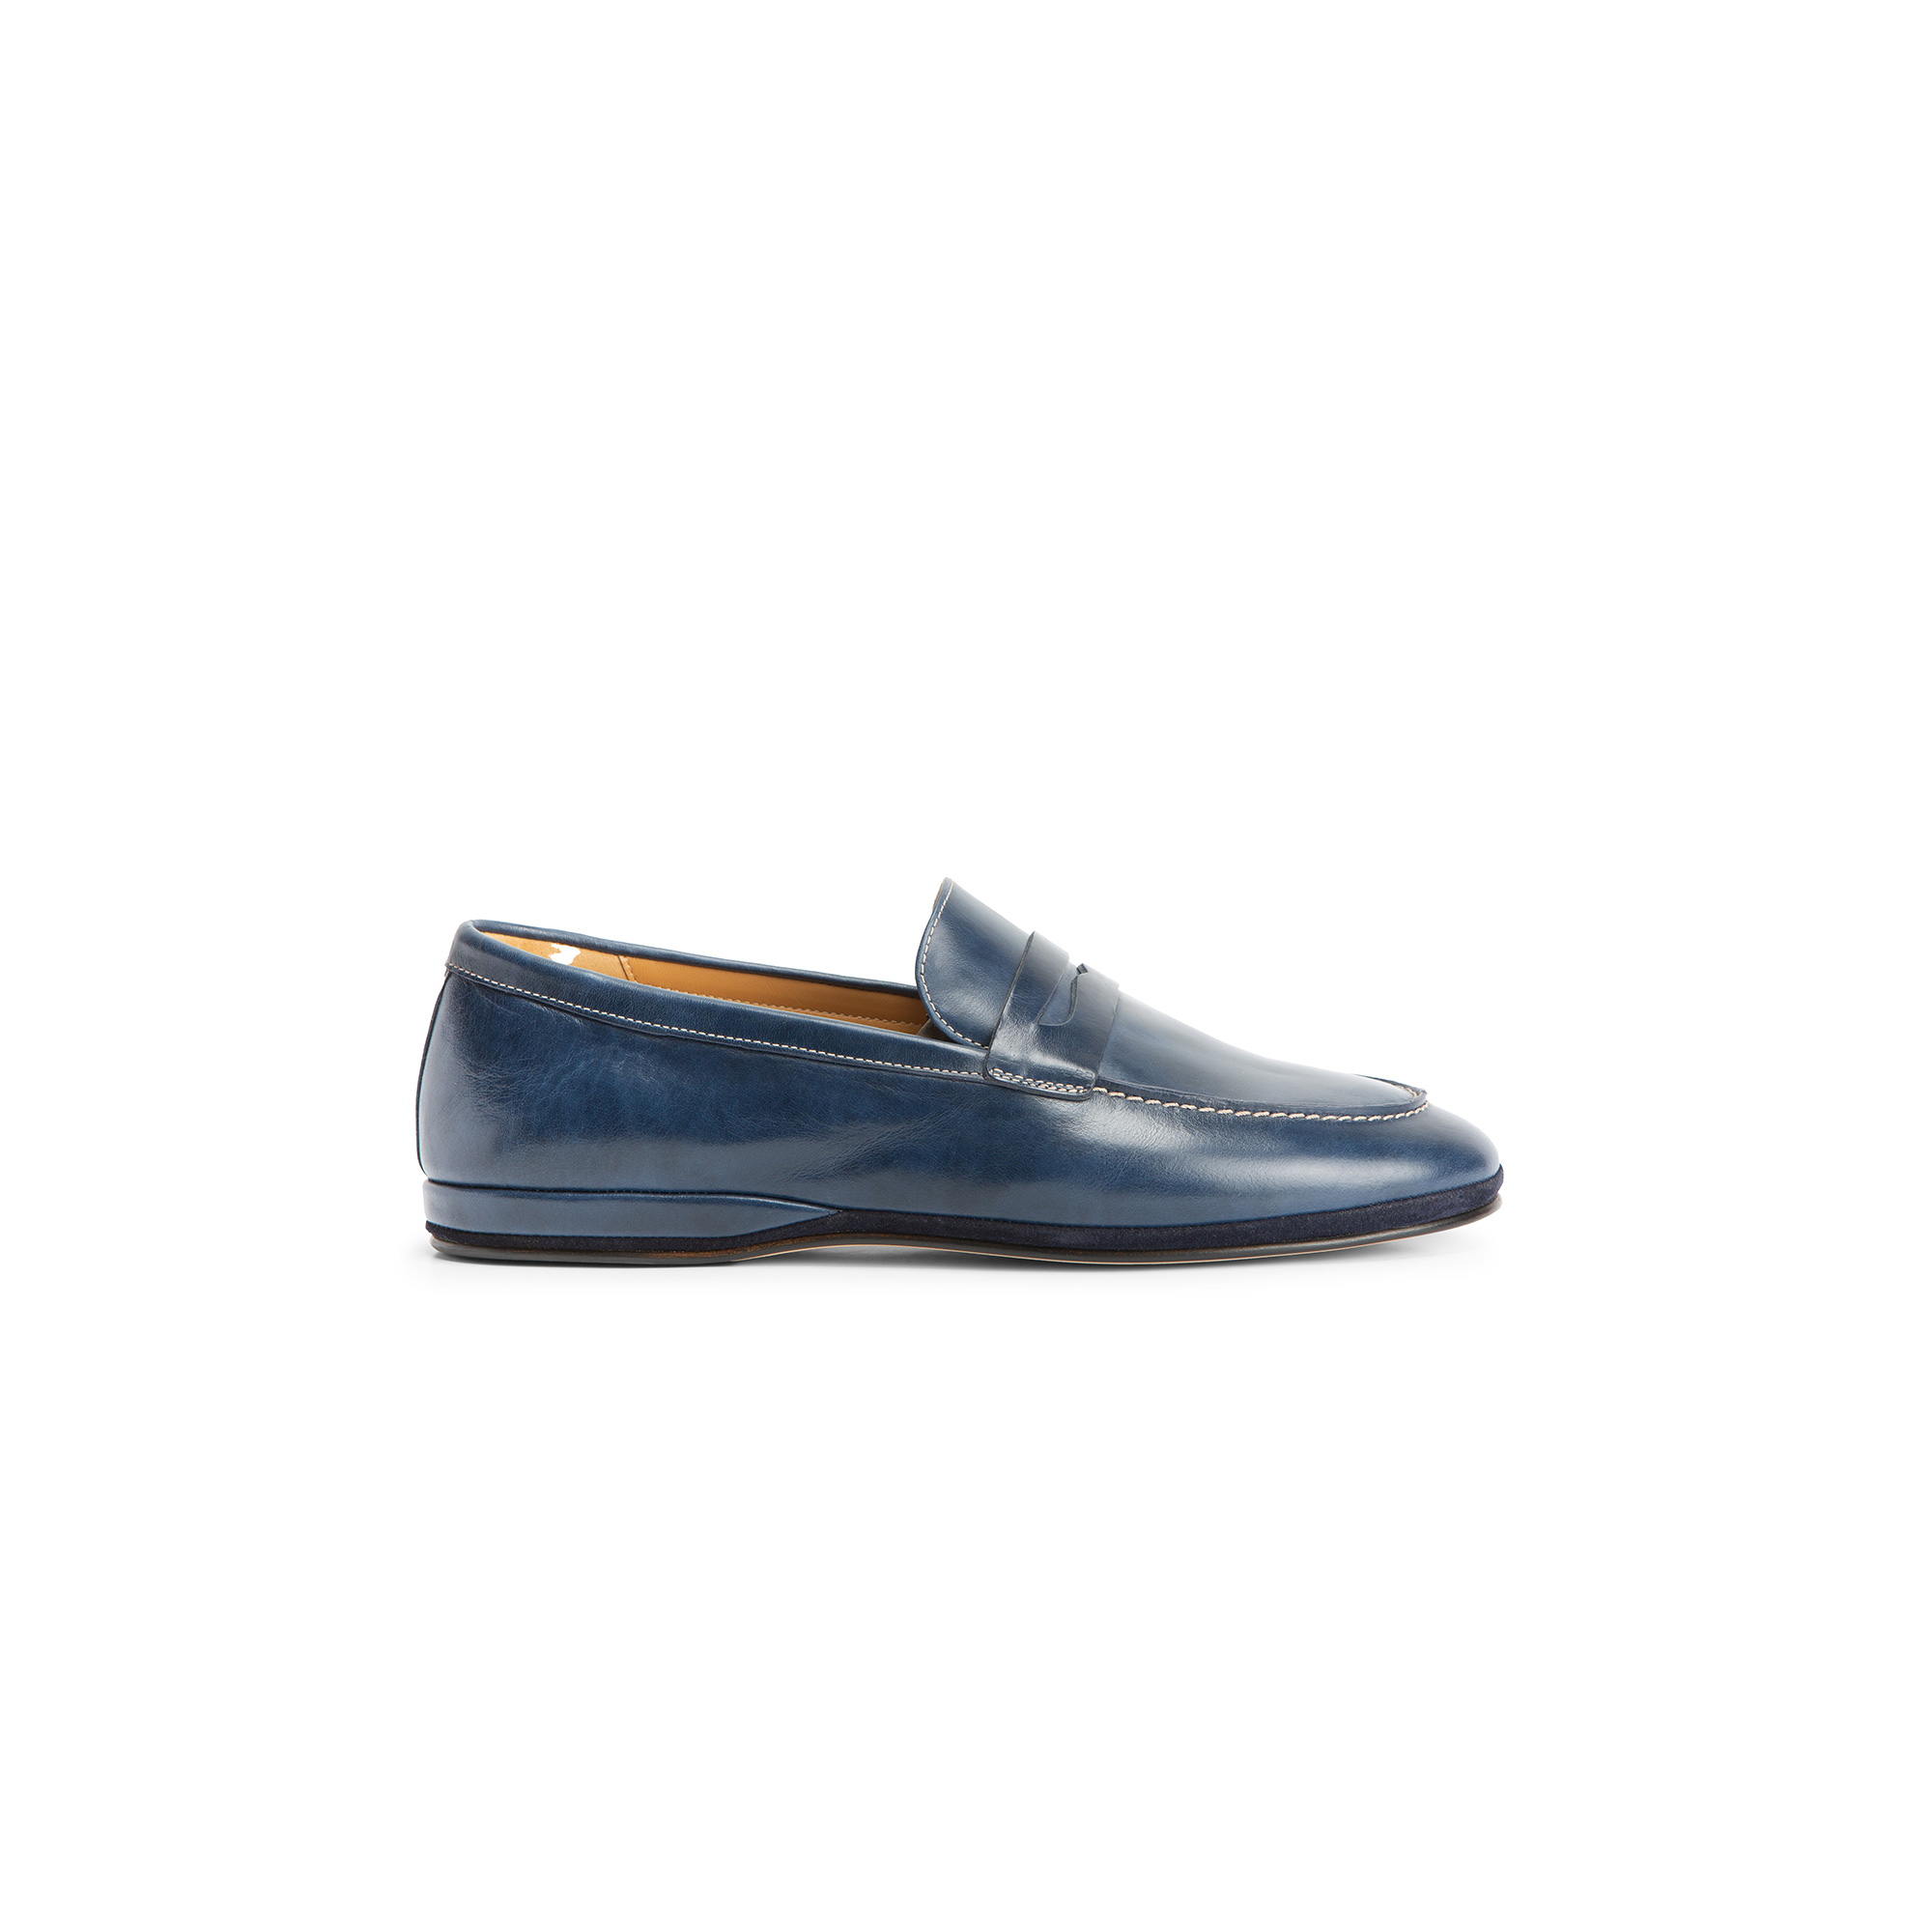 Pantofola chiusa esterno vitello blu - Farfalla italian slippers